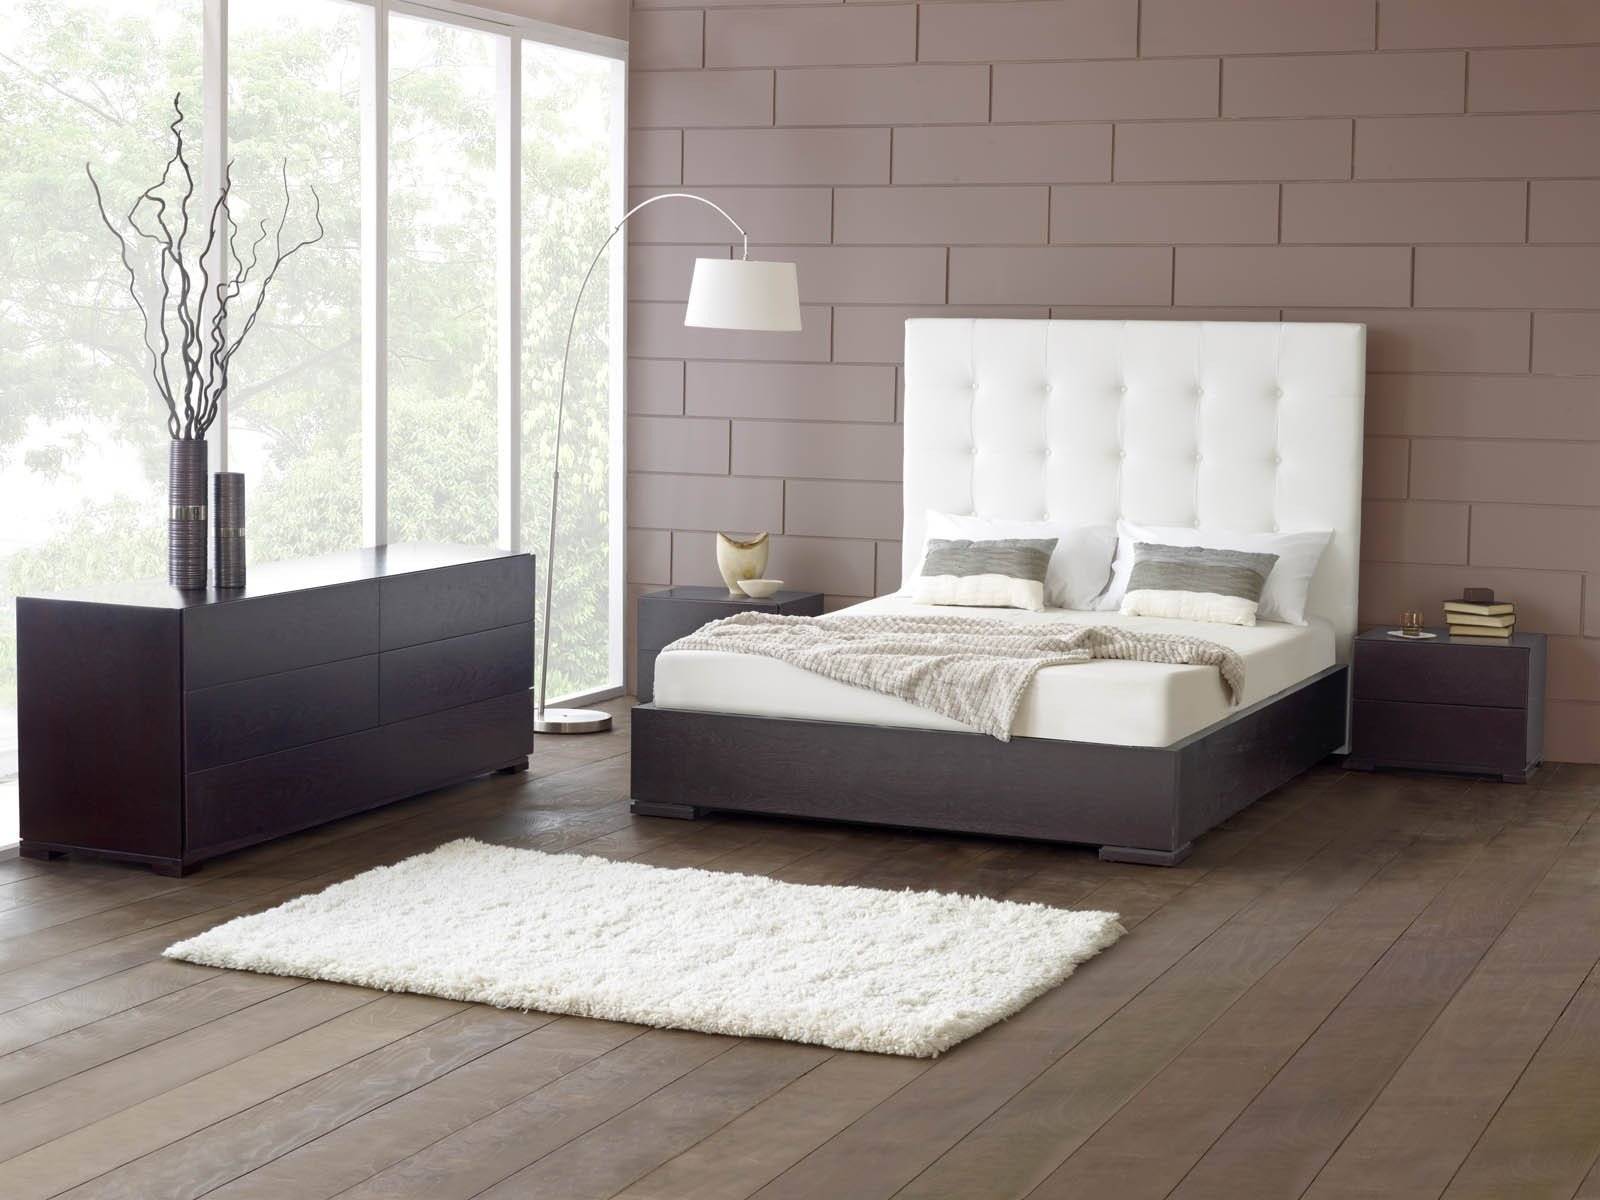 Modern Furniture For Minimalist Bedroom Decor